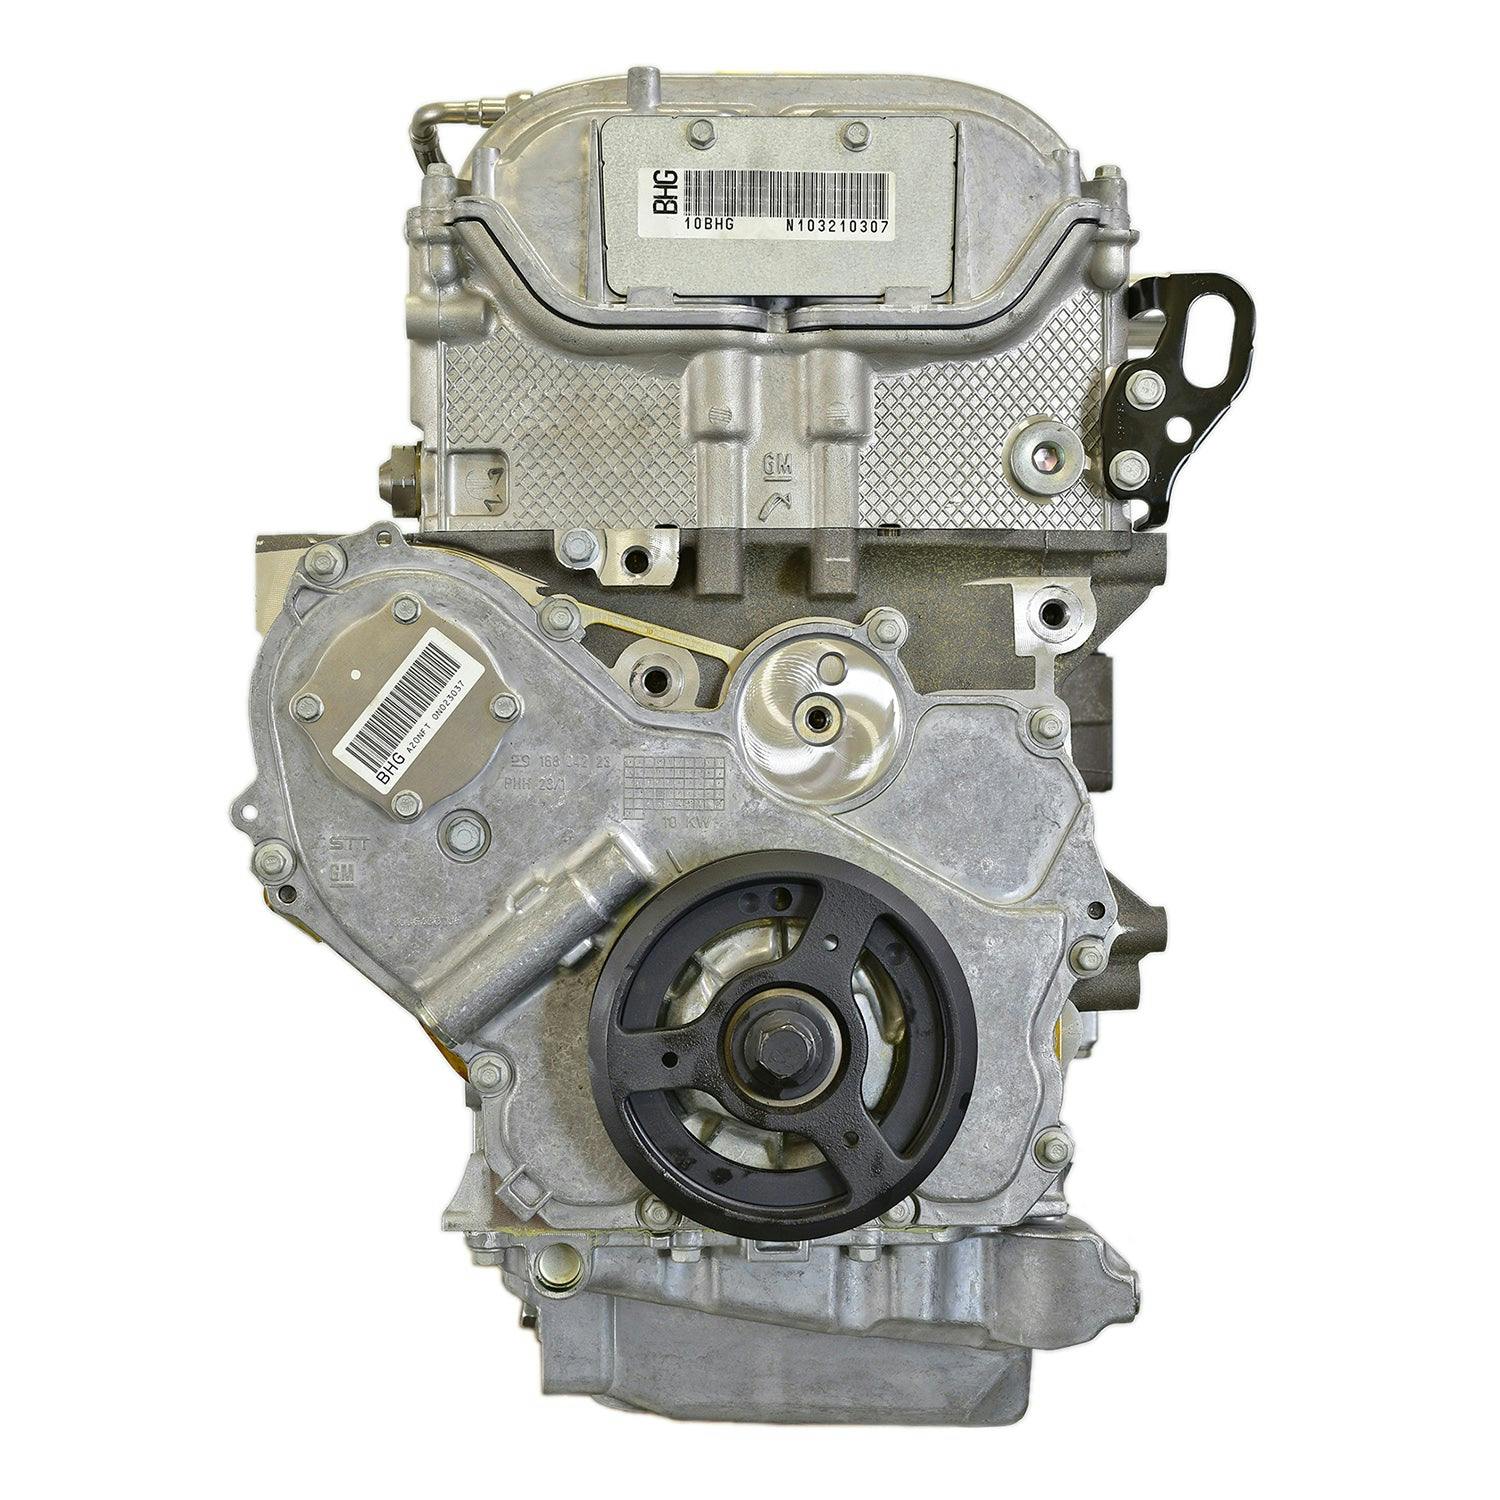 2L Inline-4 Engine for 2011-2015 Buick Regal, Verano/Saab 9-5